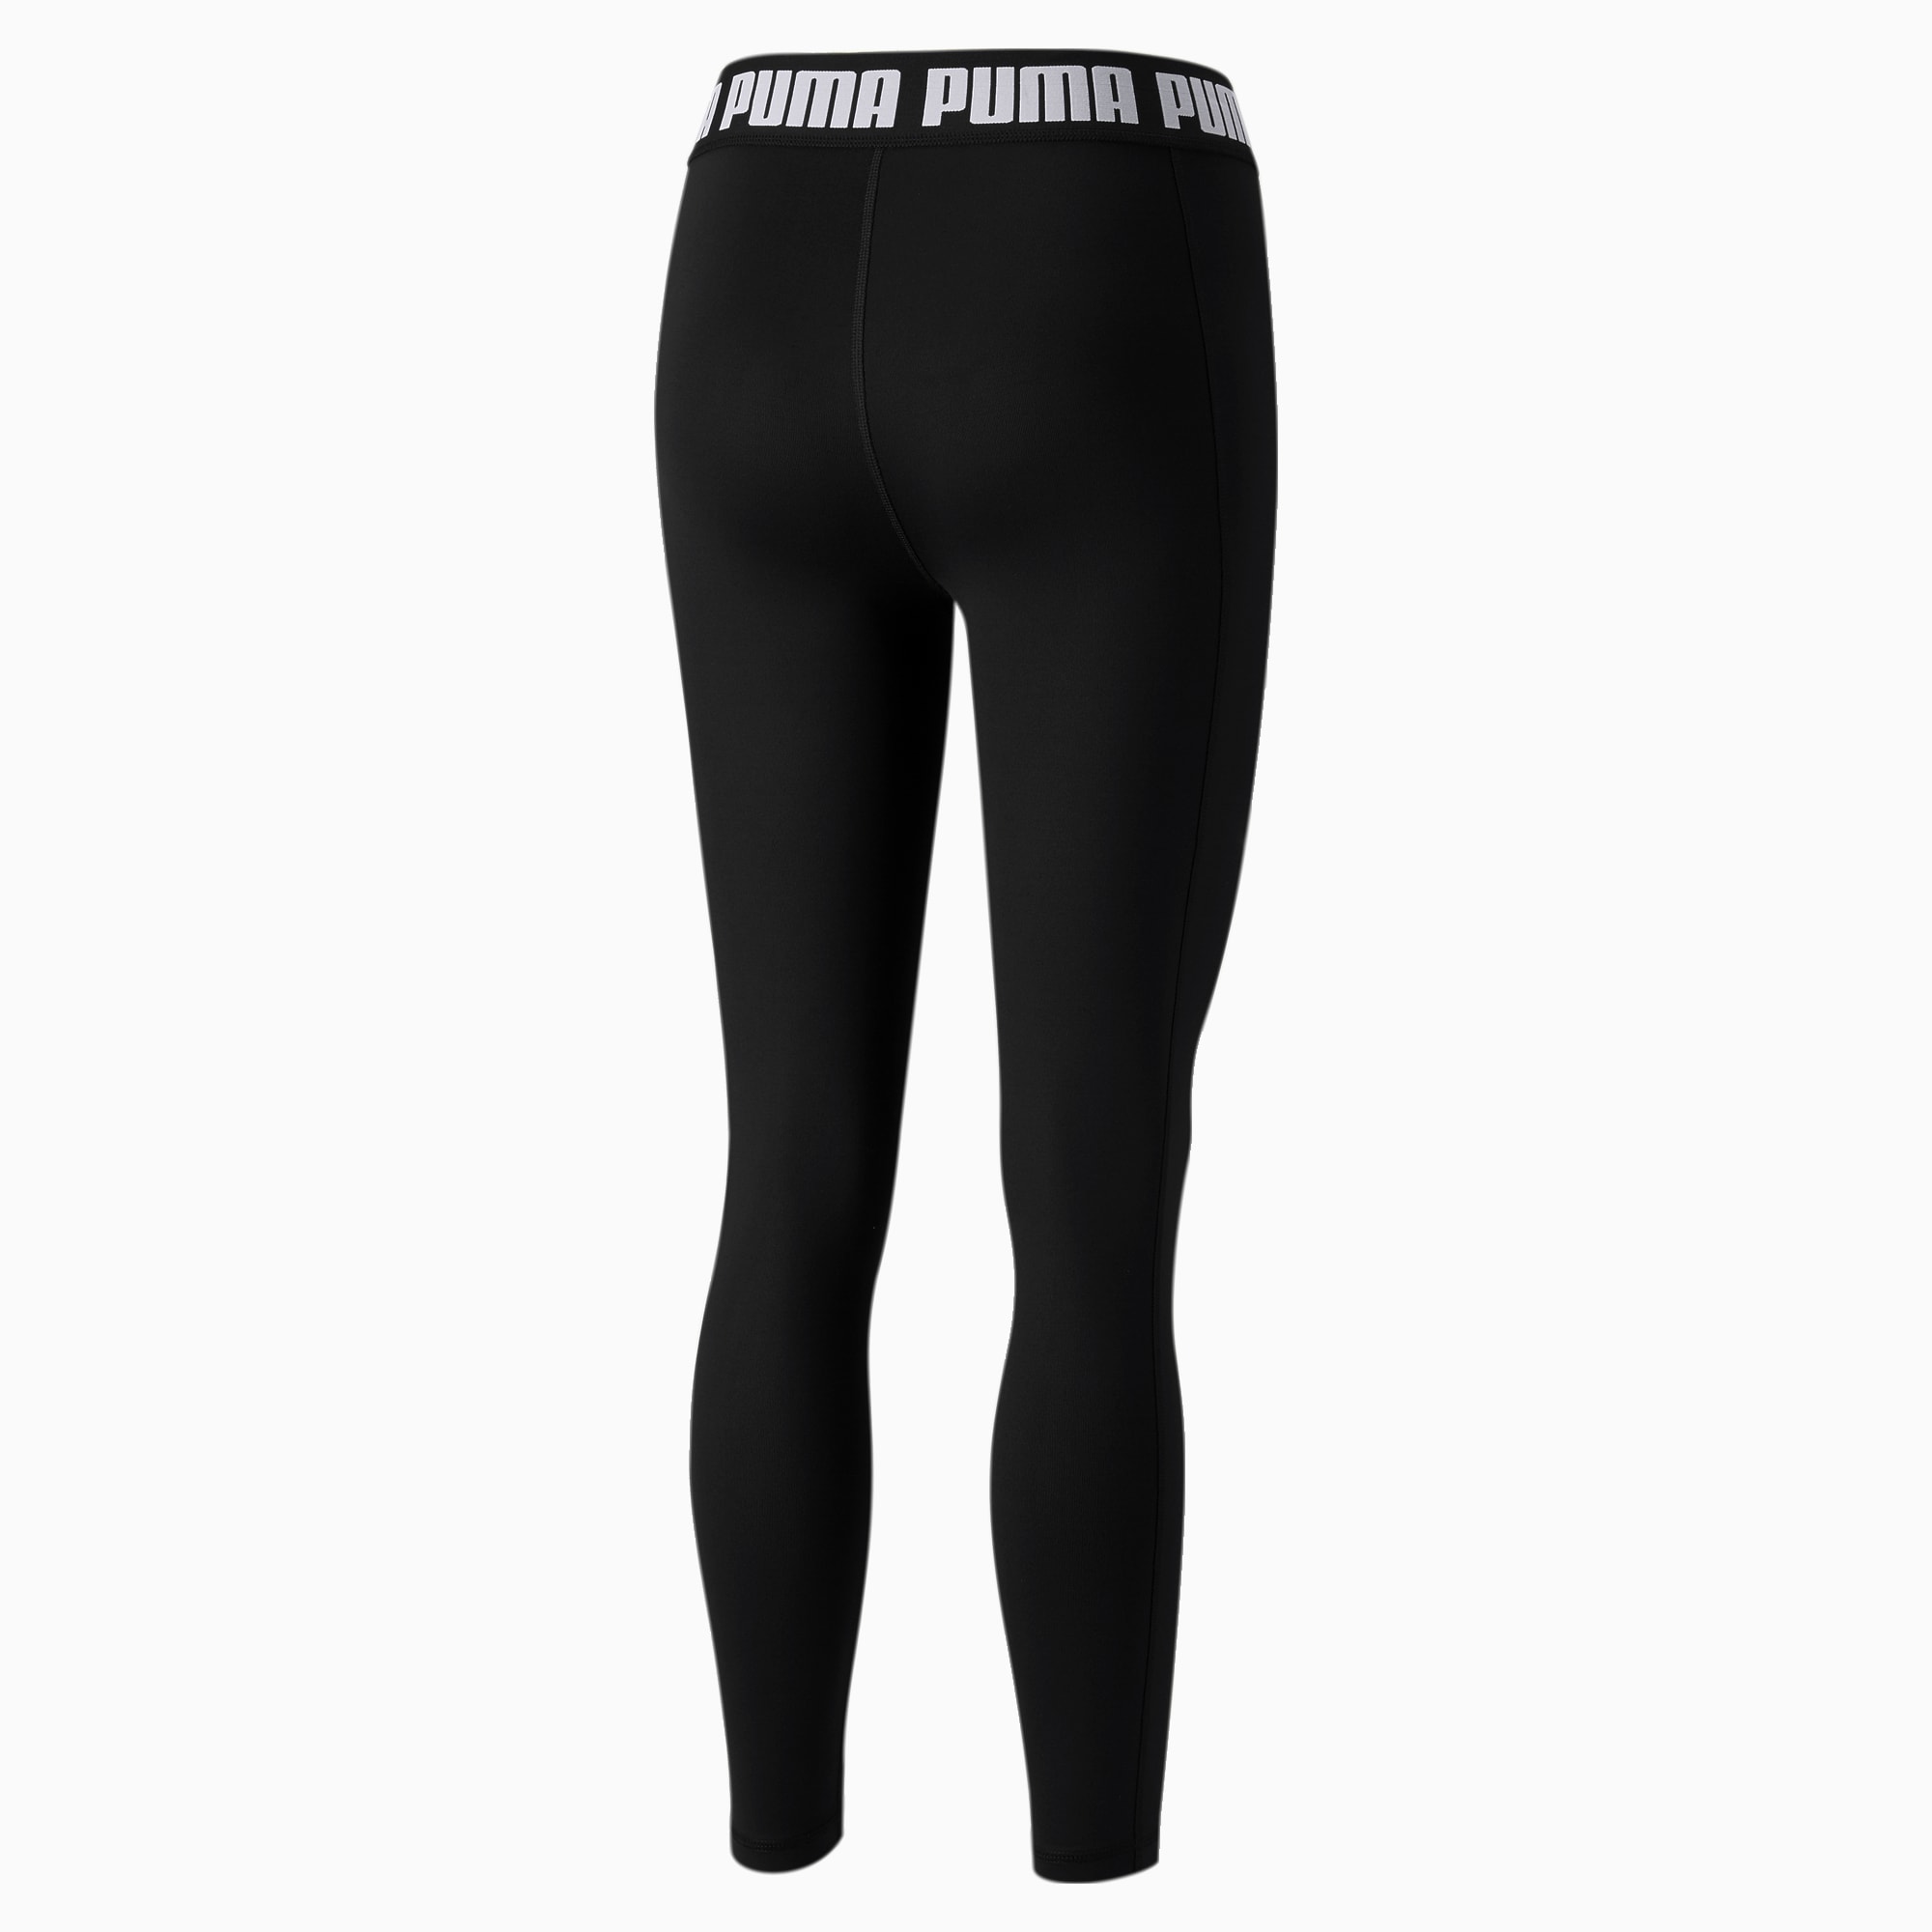 PUMA Strong High Waisted Women's Training Leggings, Black, Size M, Clothing